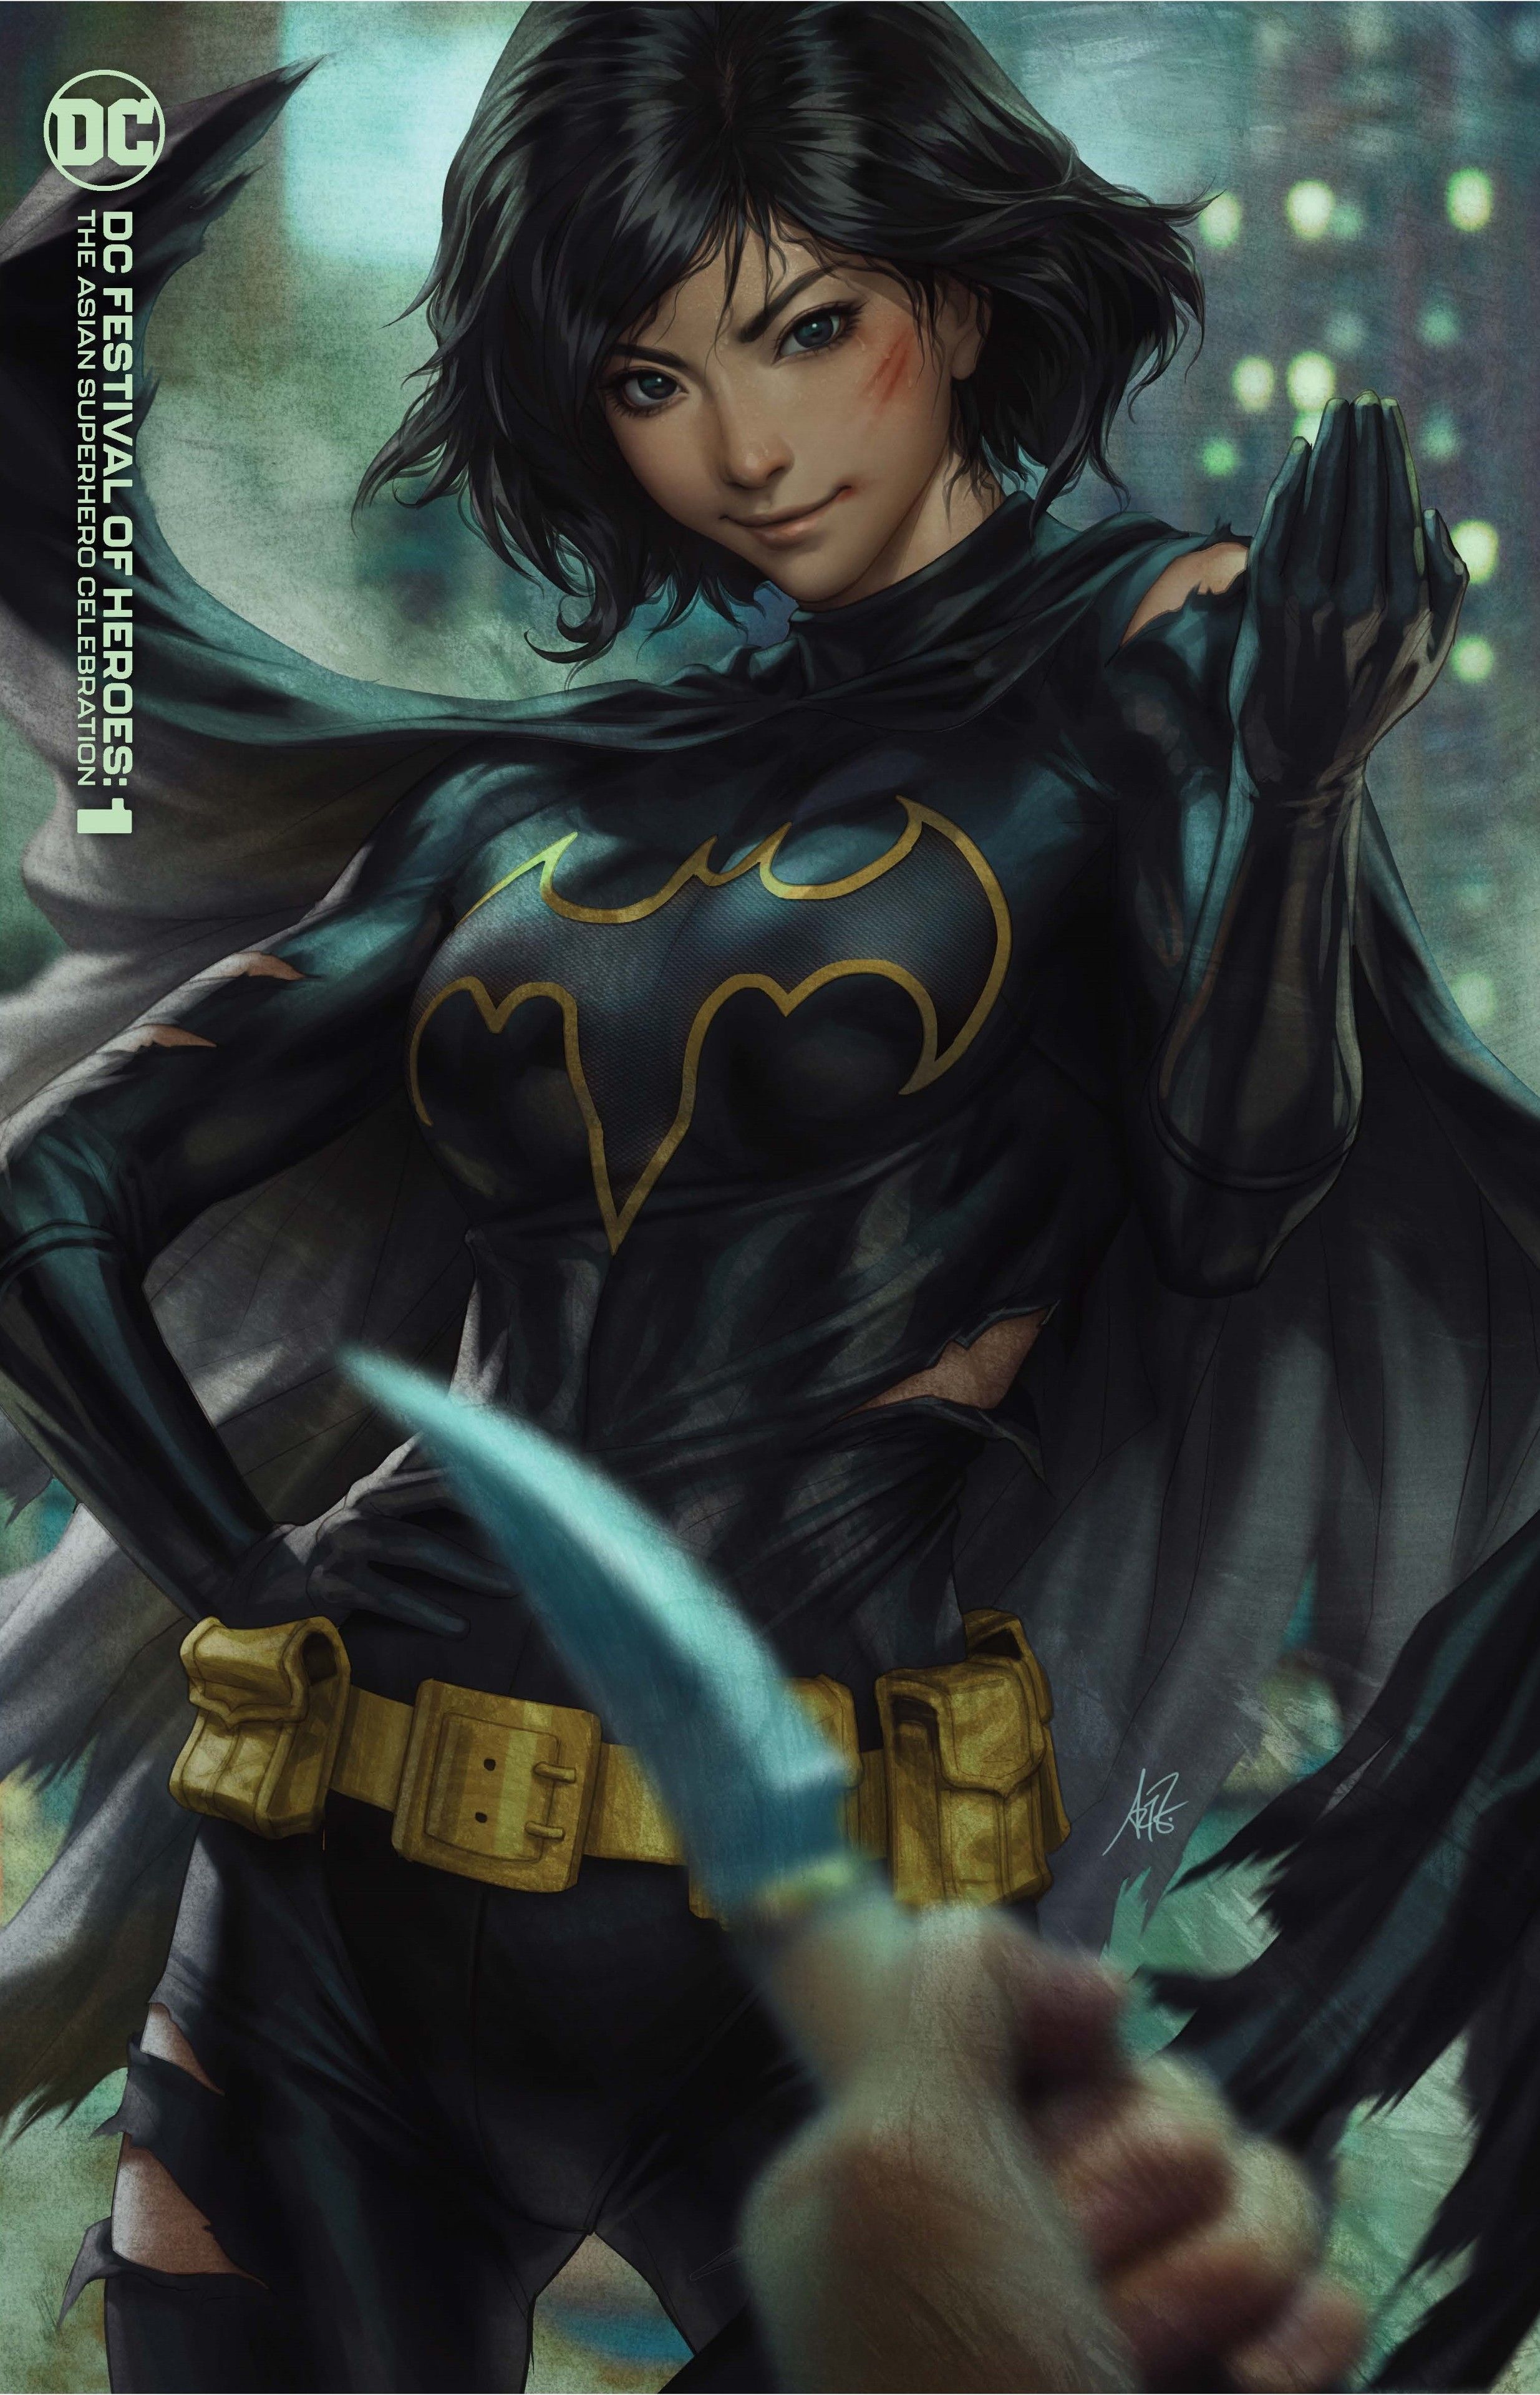 Cassandra Cain Batgirl Gets Stunning Cover Art Ahead Of New Stories 1753